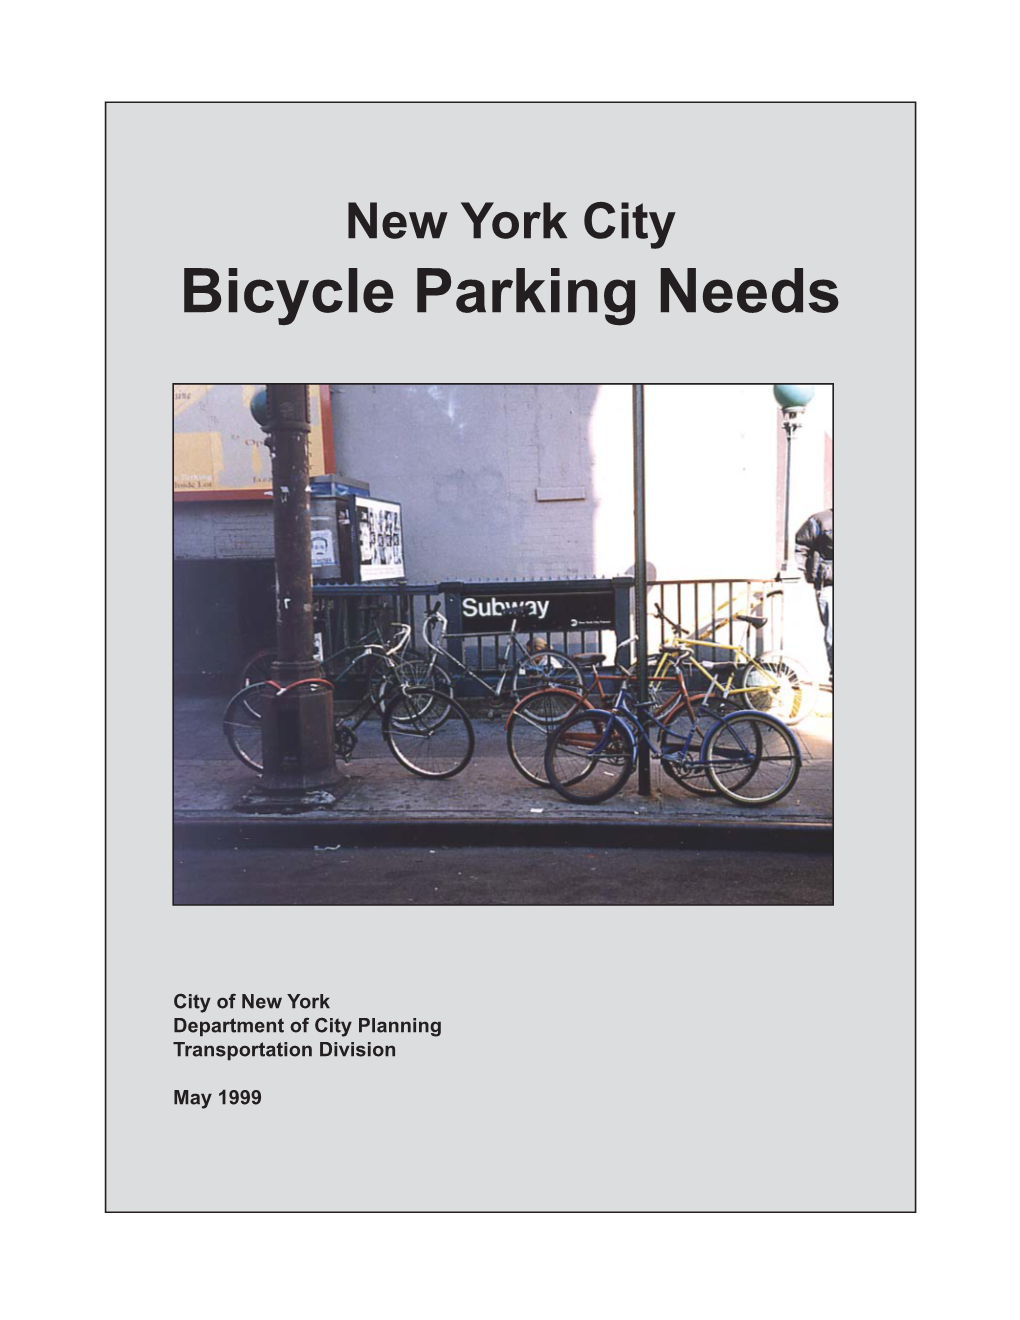 Bicycle Parking Needs